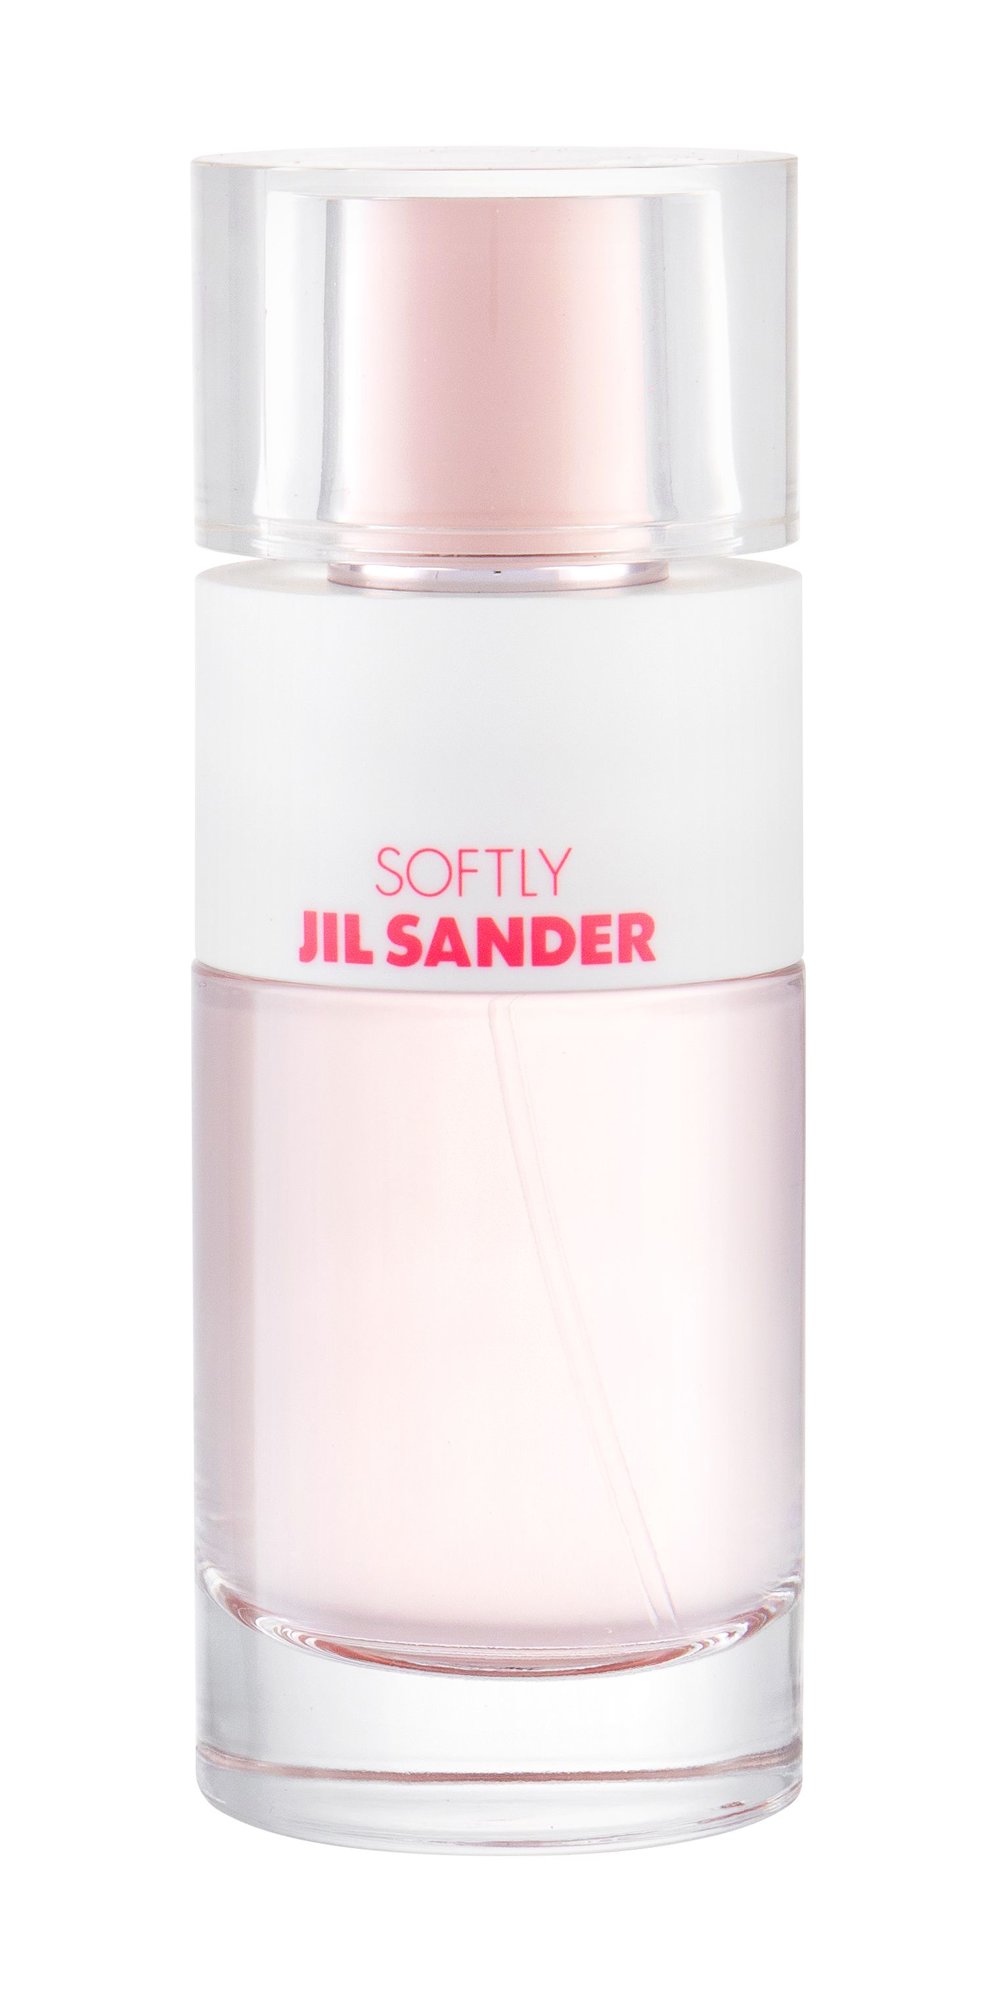 Jil Sander Softly